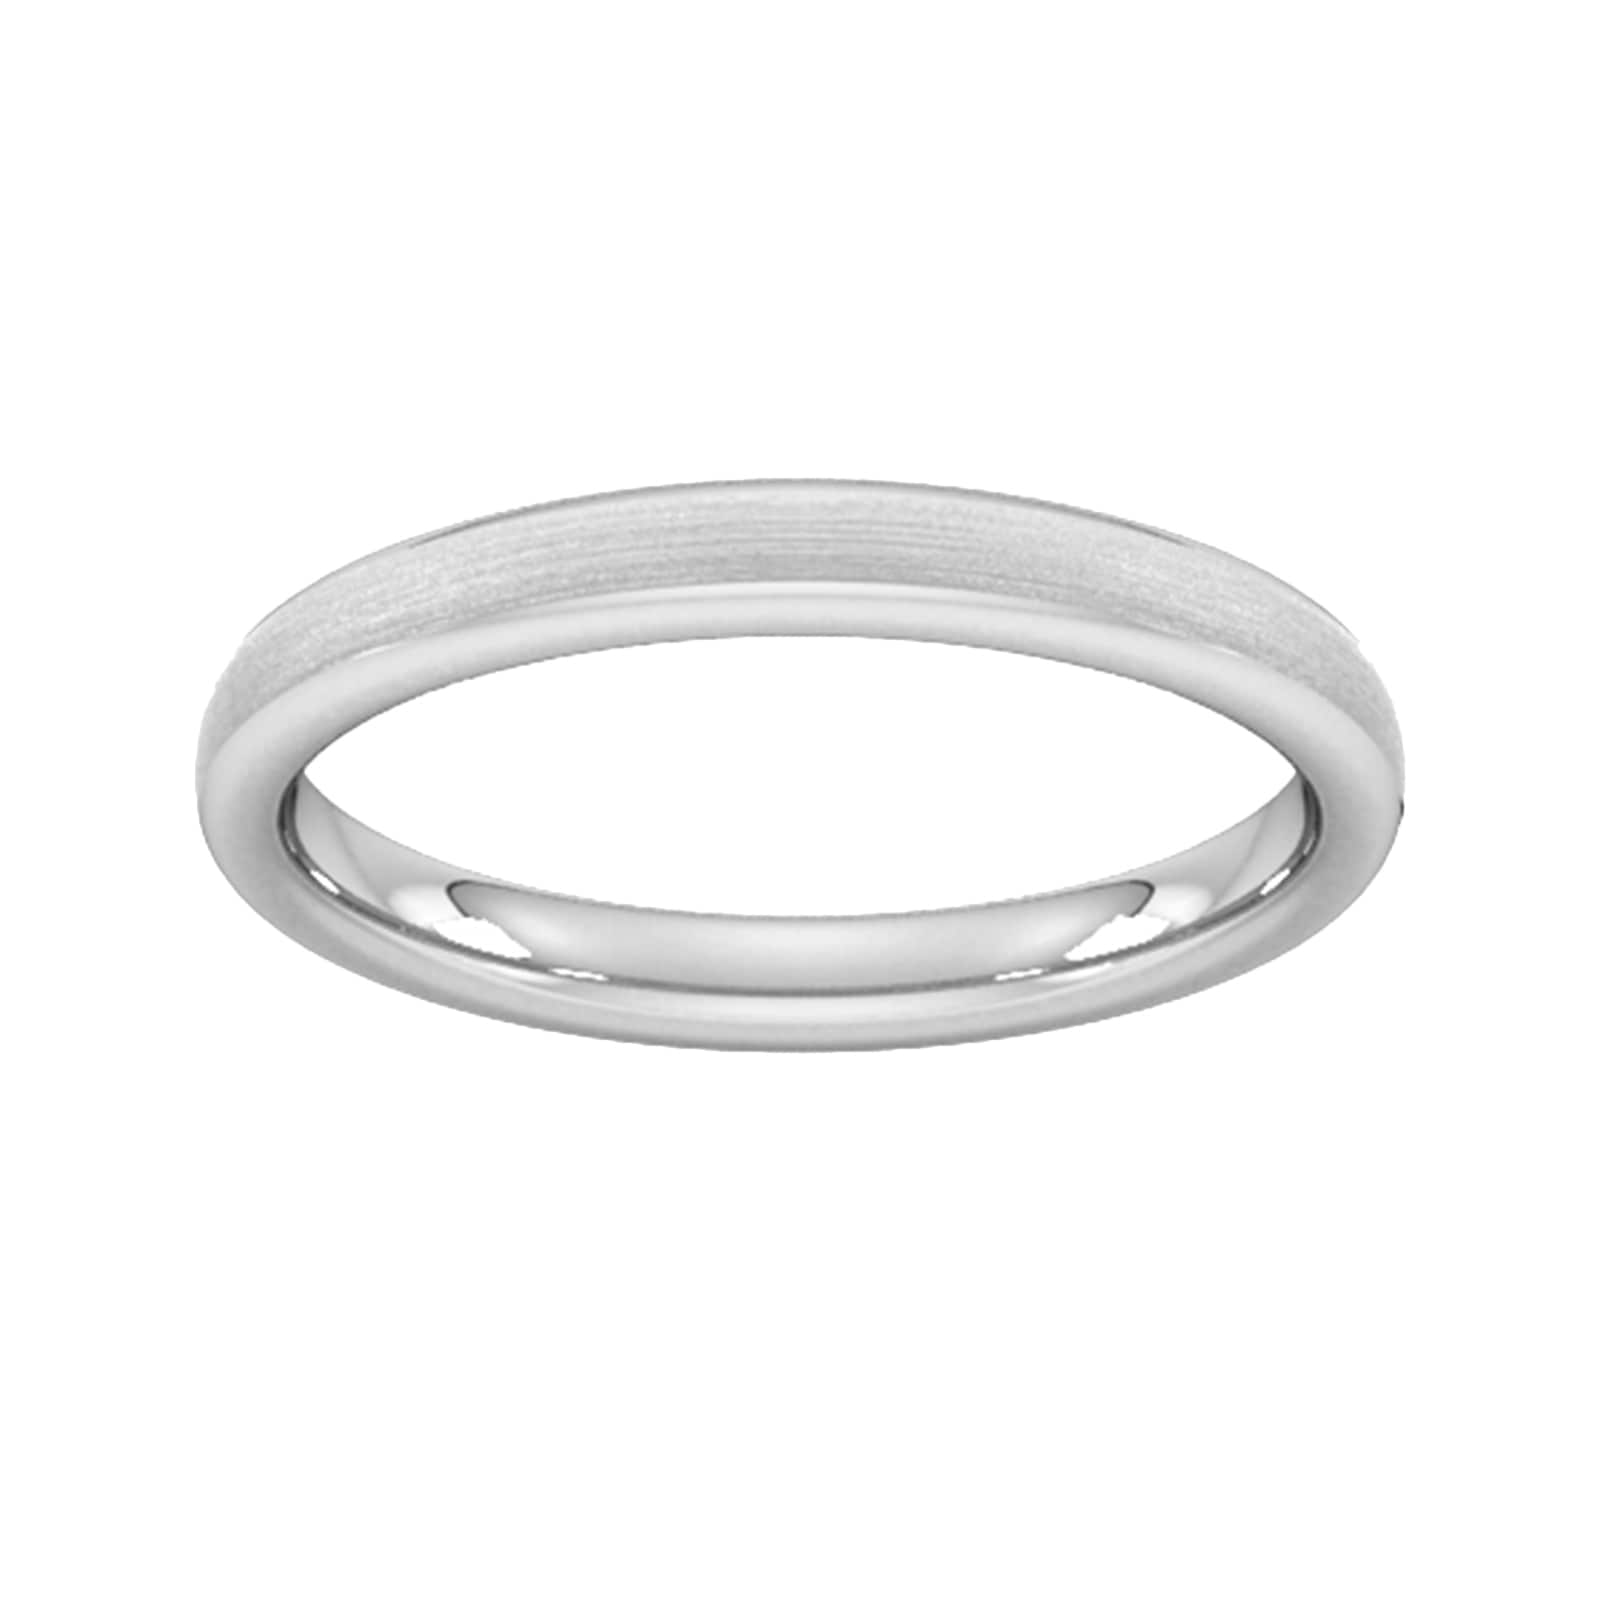 2.5mm Slight Court Standard Matt Finished Wedding Ring In 950 Palladium - Ring Size N